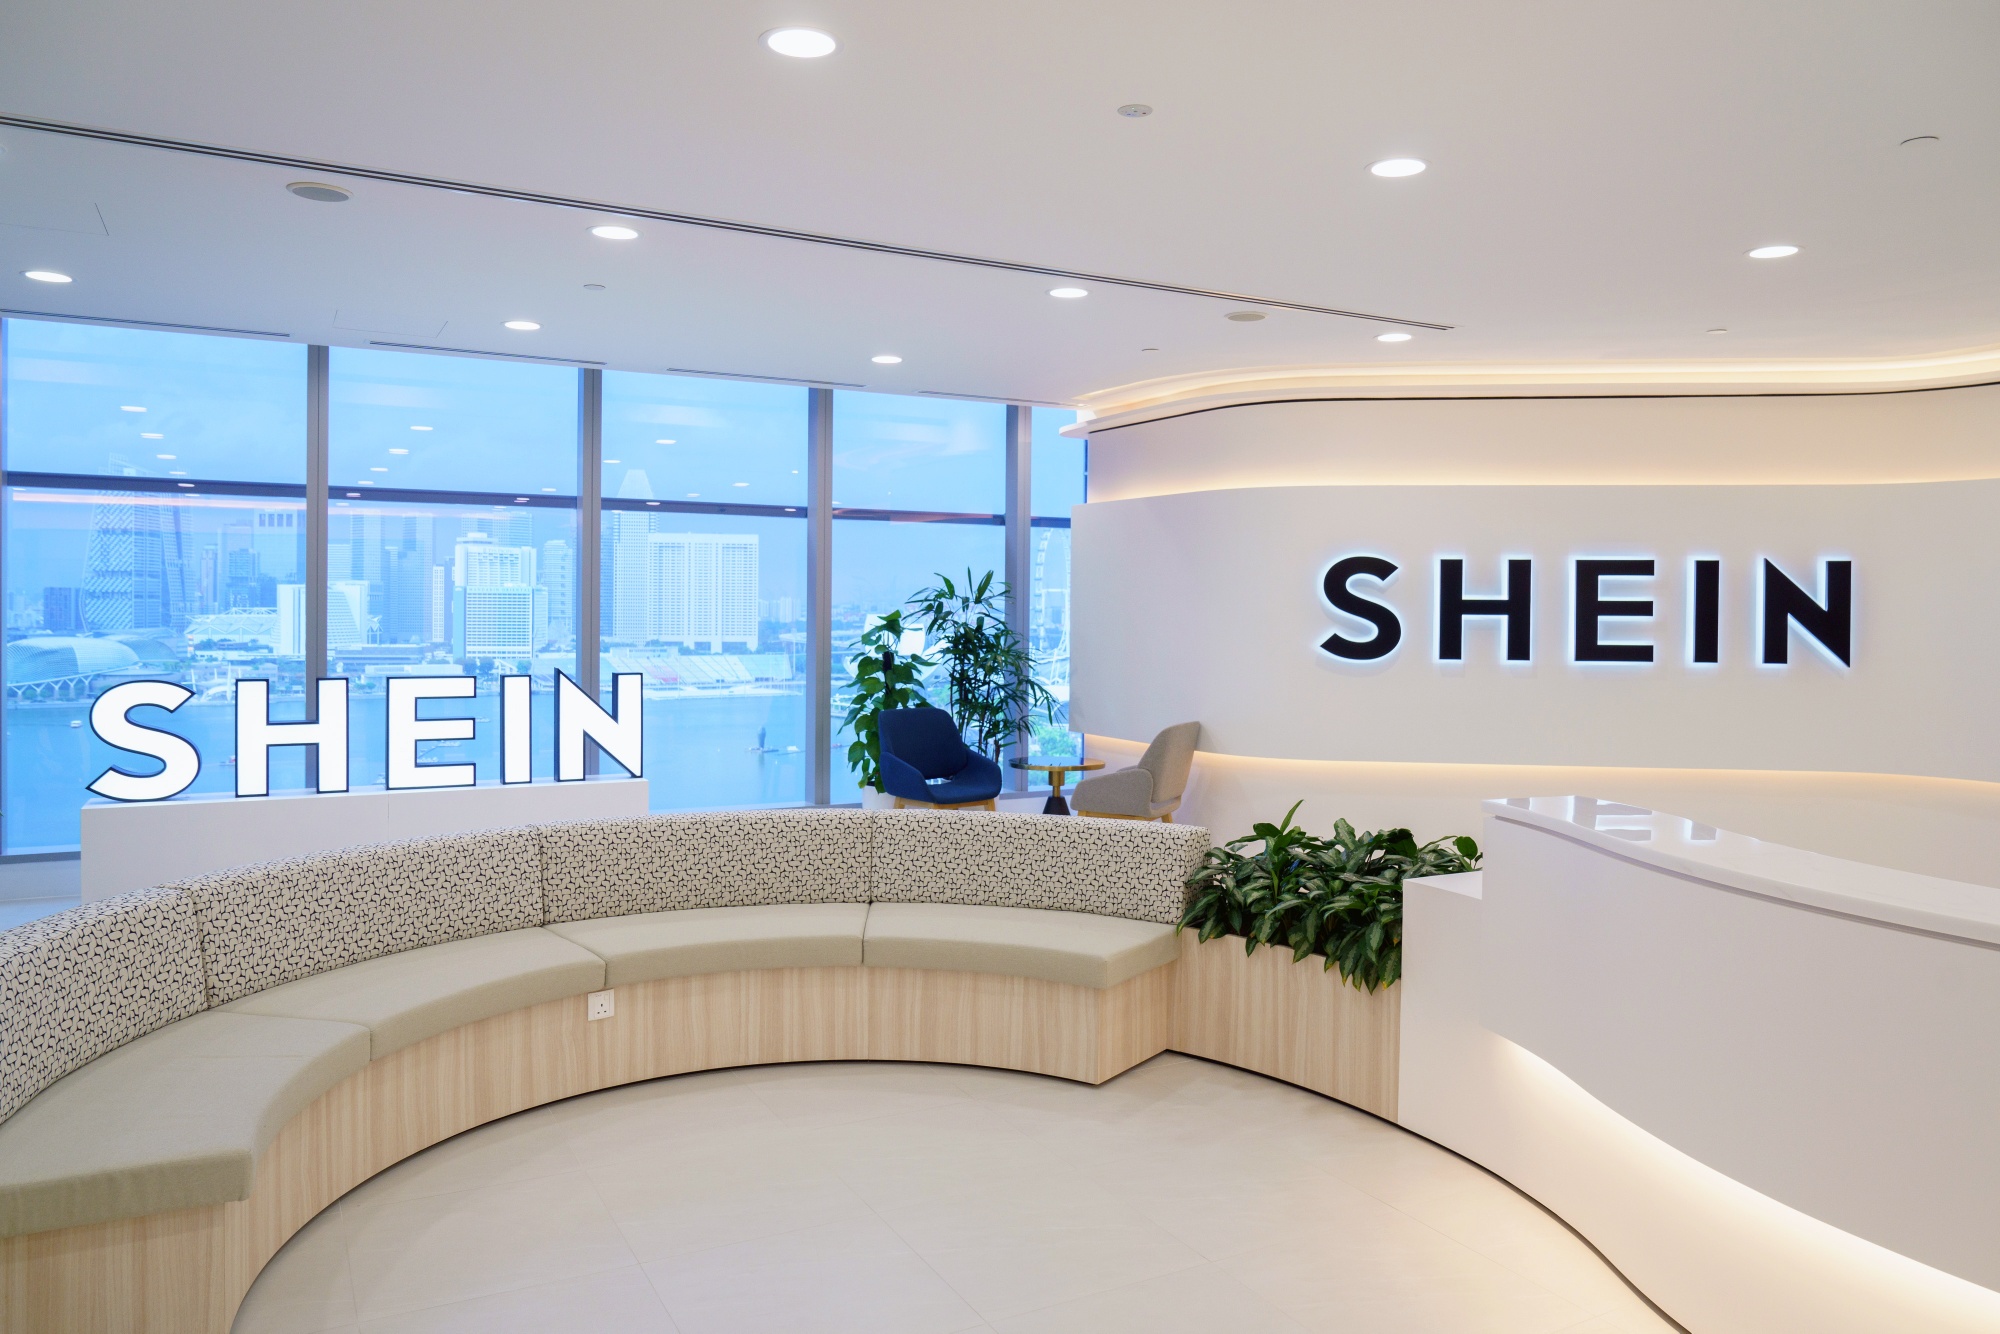 Shein&nbsp;headquarters in Singapore.